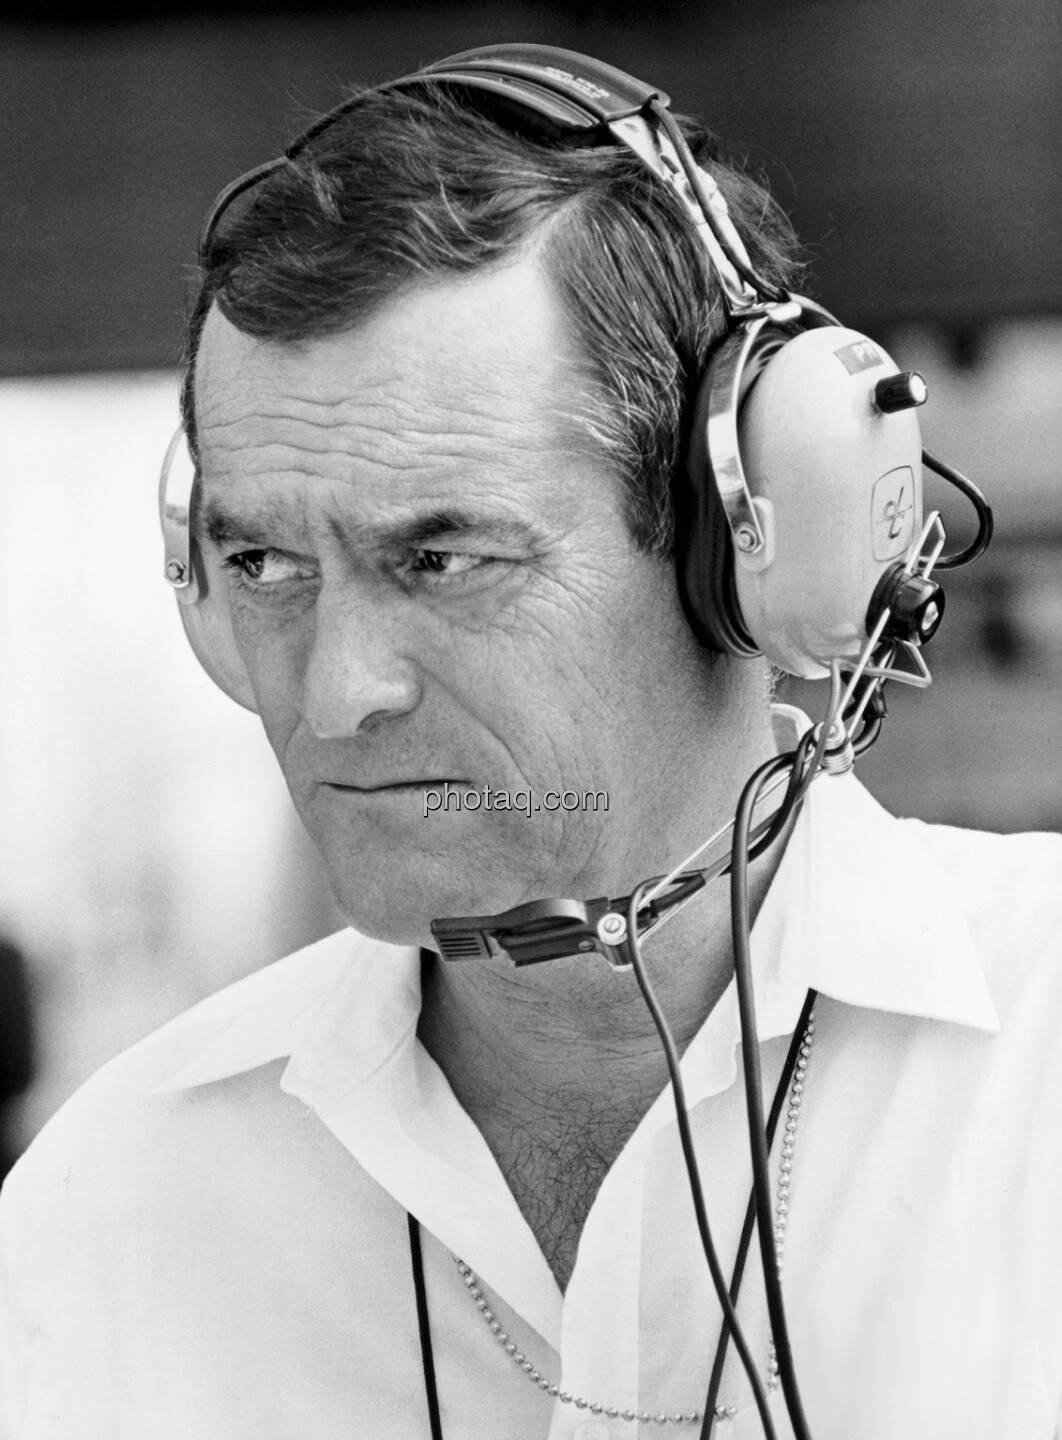 Paul Rosche, Der „Vater“ des Formel-1-Weltmeister-Motors, wird heute 81 Jahre alt, finanzmarktfoto.at wünscht alles Gute!